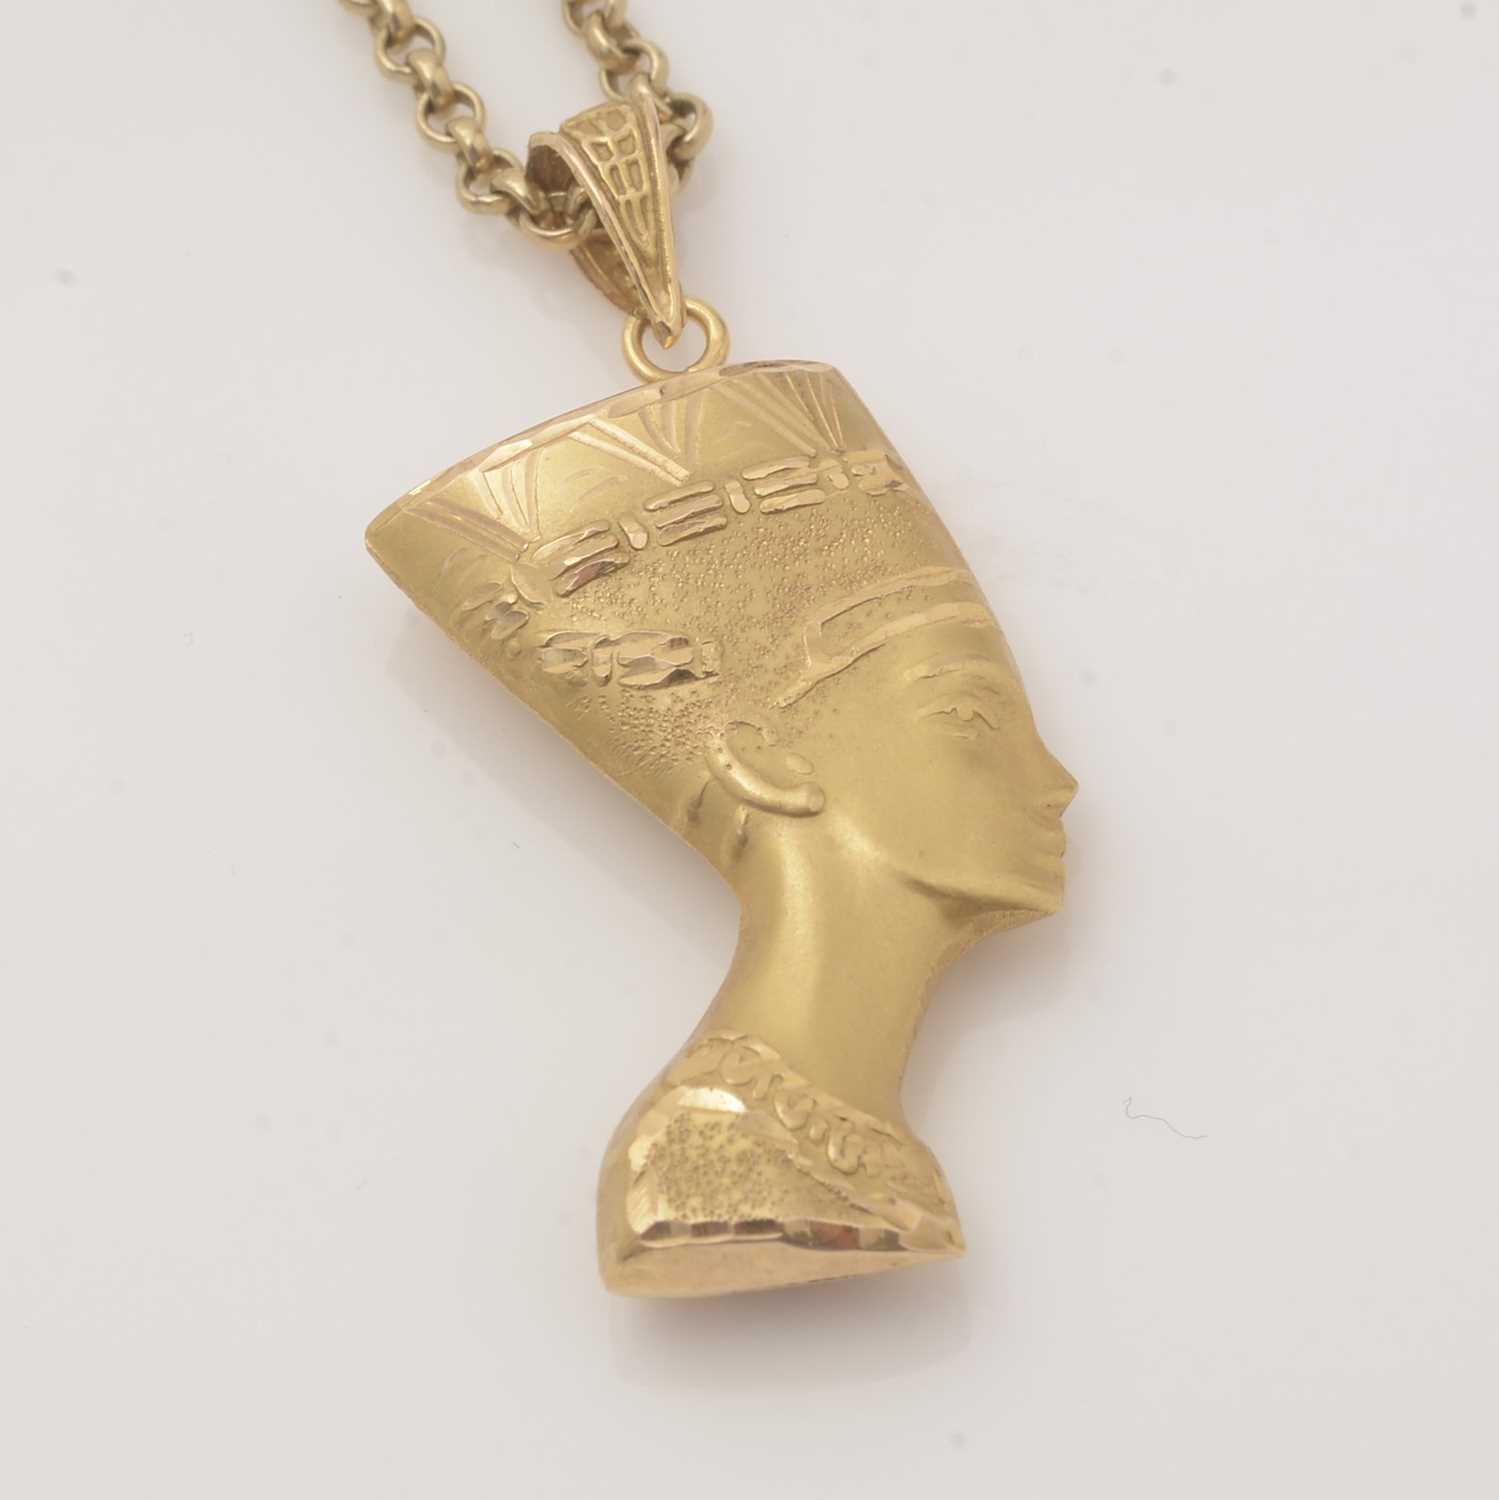 A gold Queen Nefertiti pendant on chain - Image 2 of 3